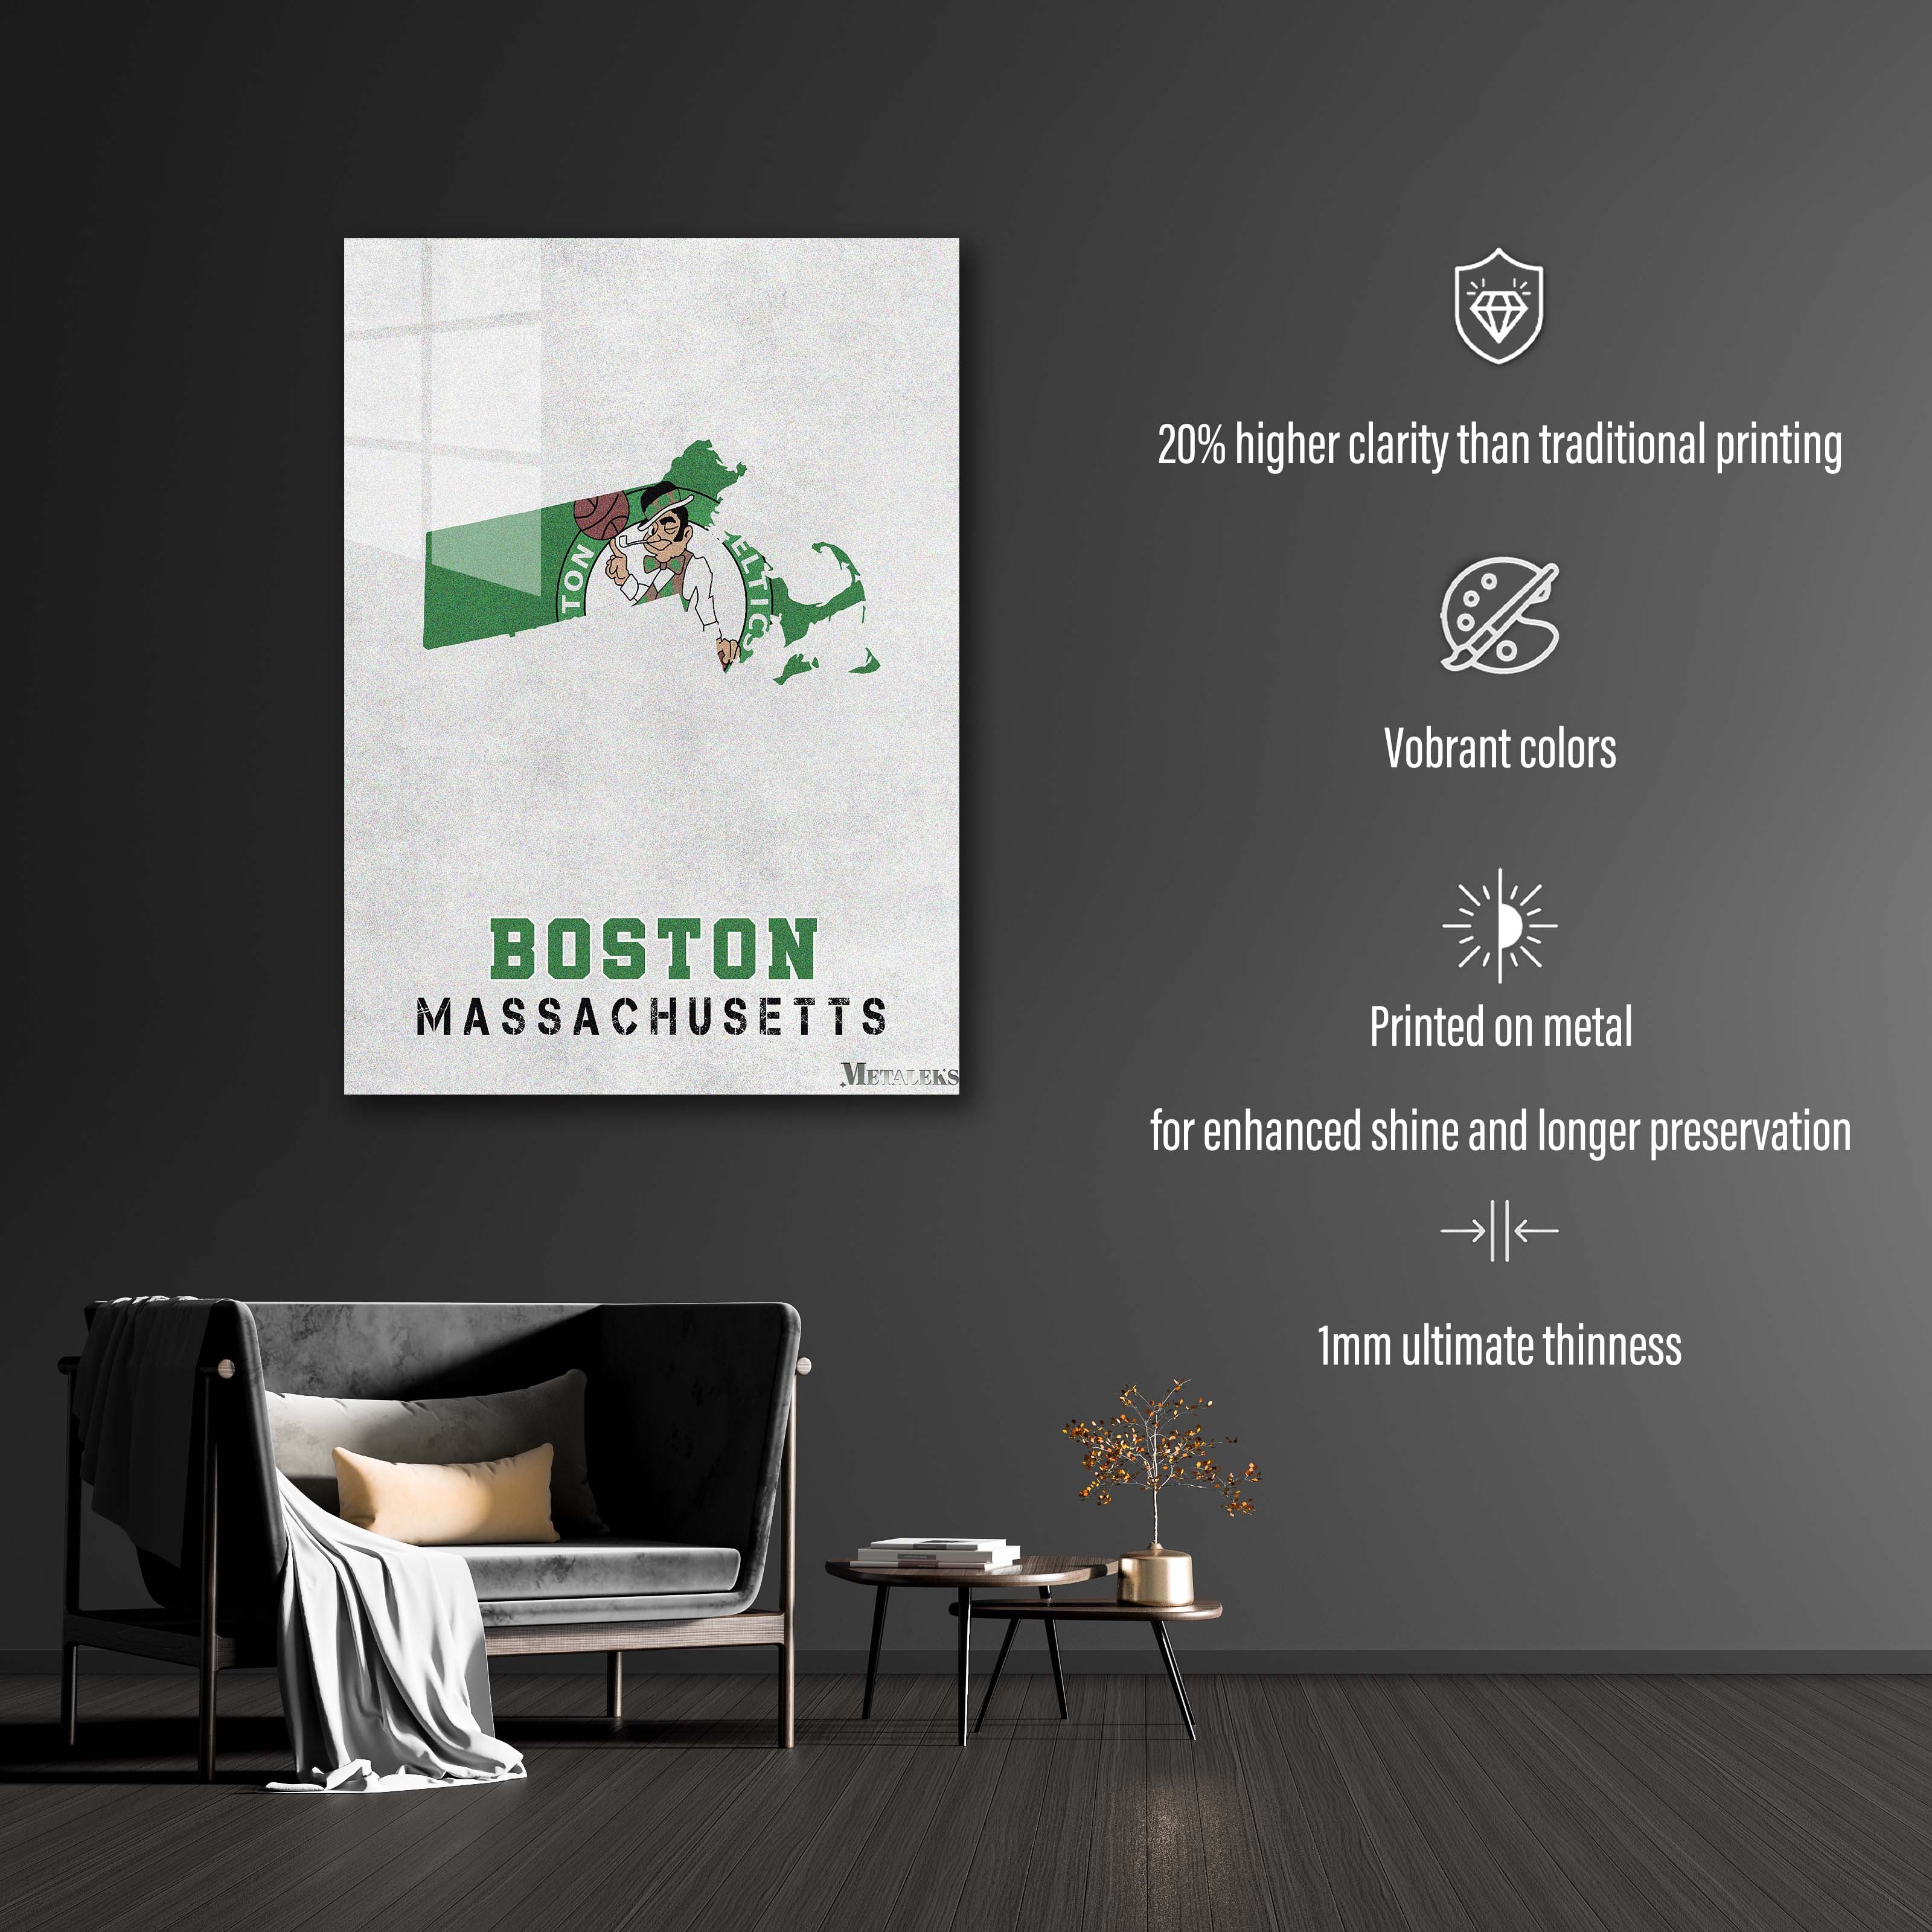 Boston Celtics-designed by @Hoang Van Thuan